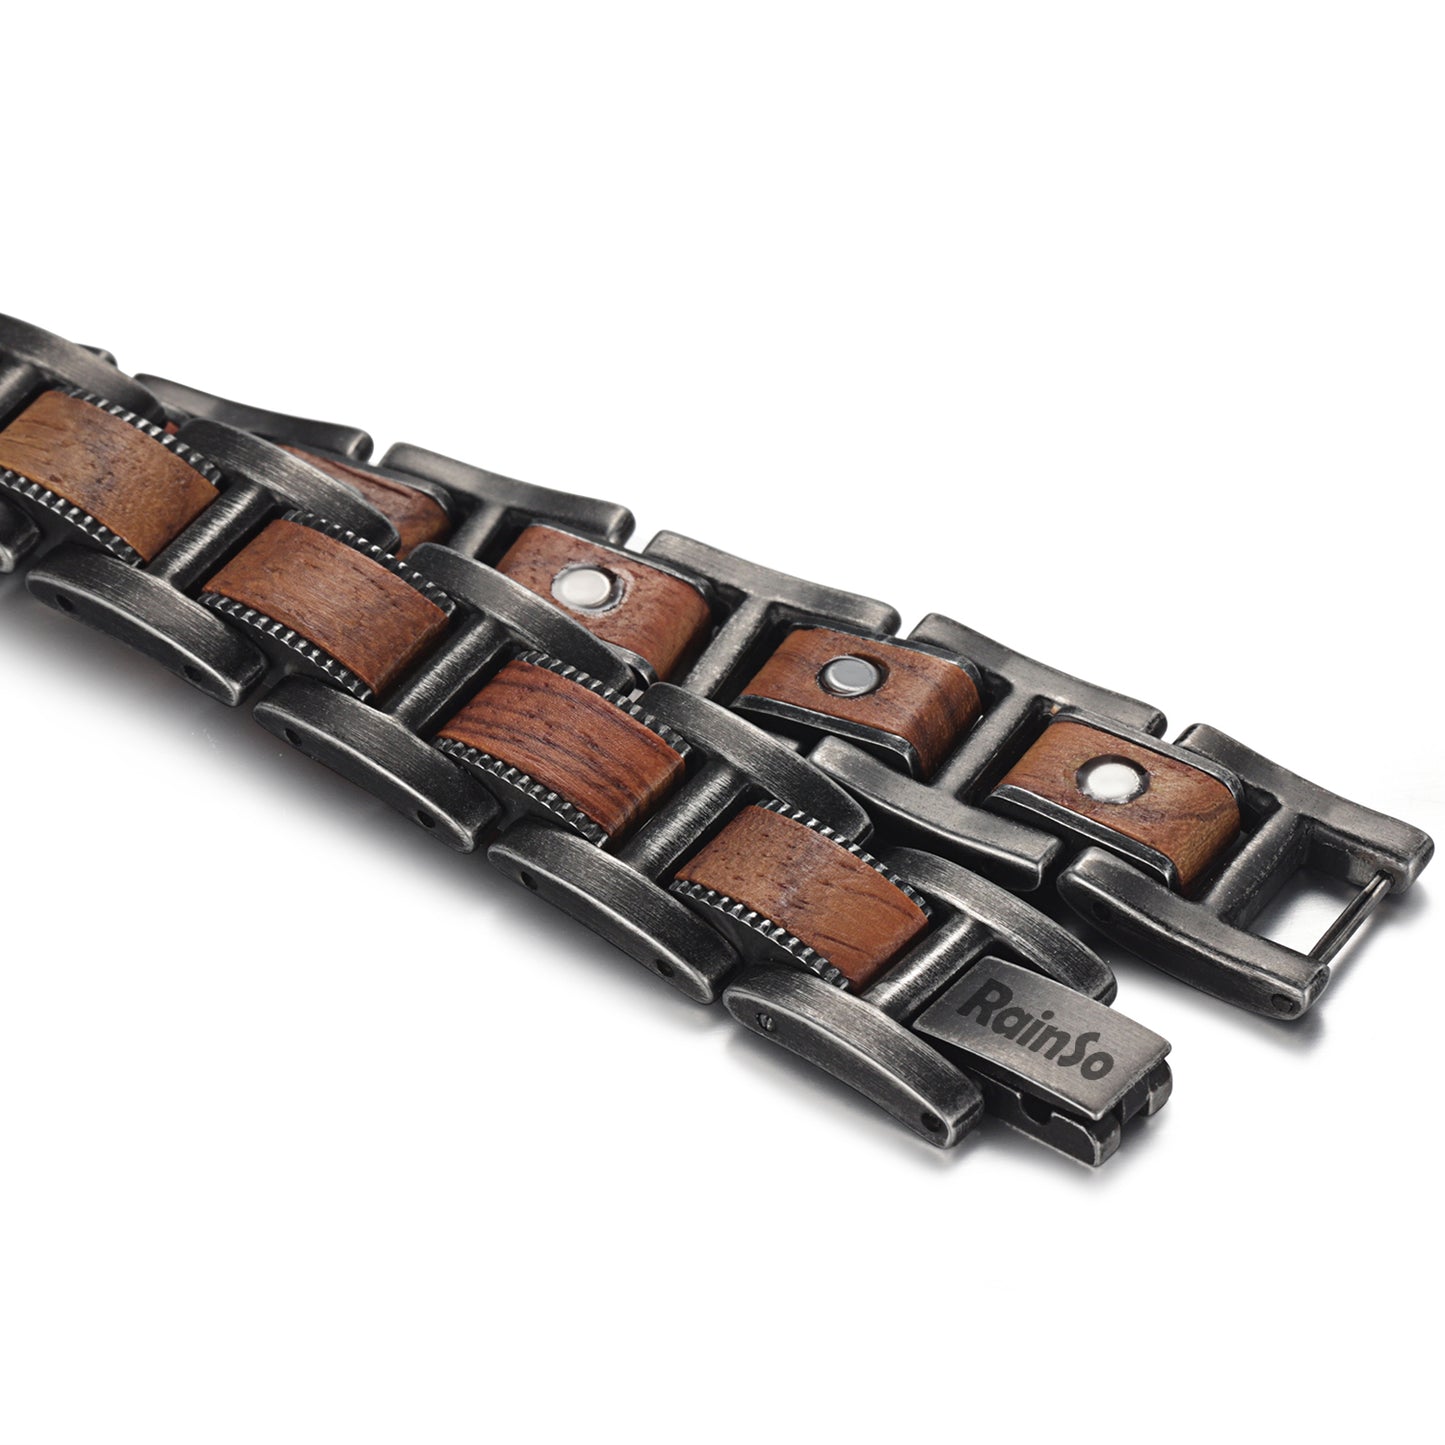 Men’s High Gauss Stainless Steel Zebrawood Effective Magnetic Bracelets Benefits